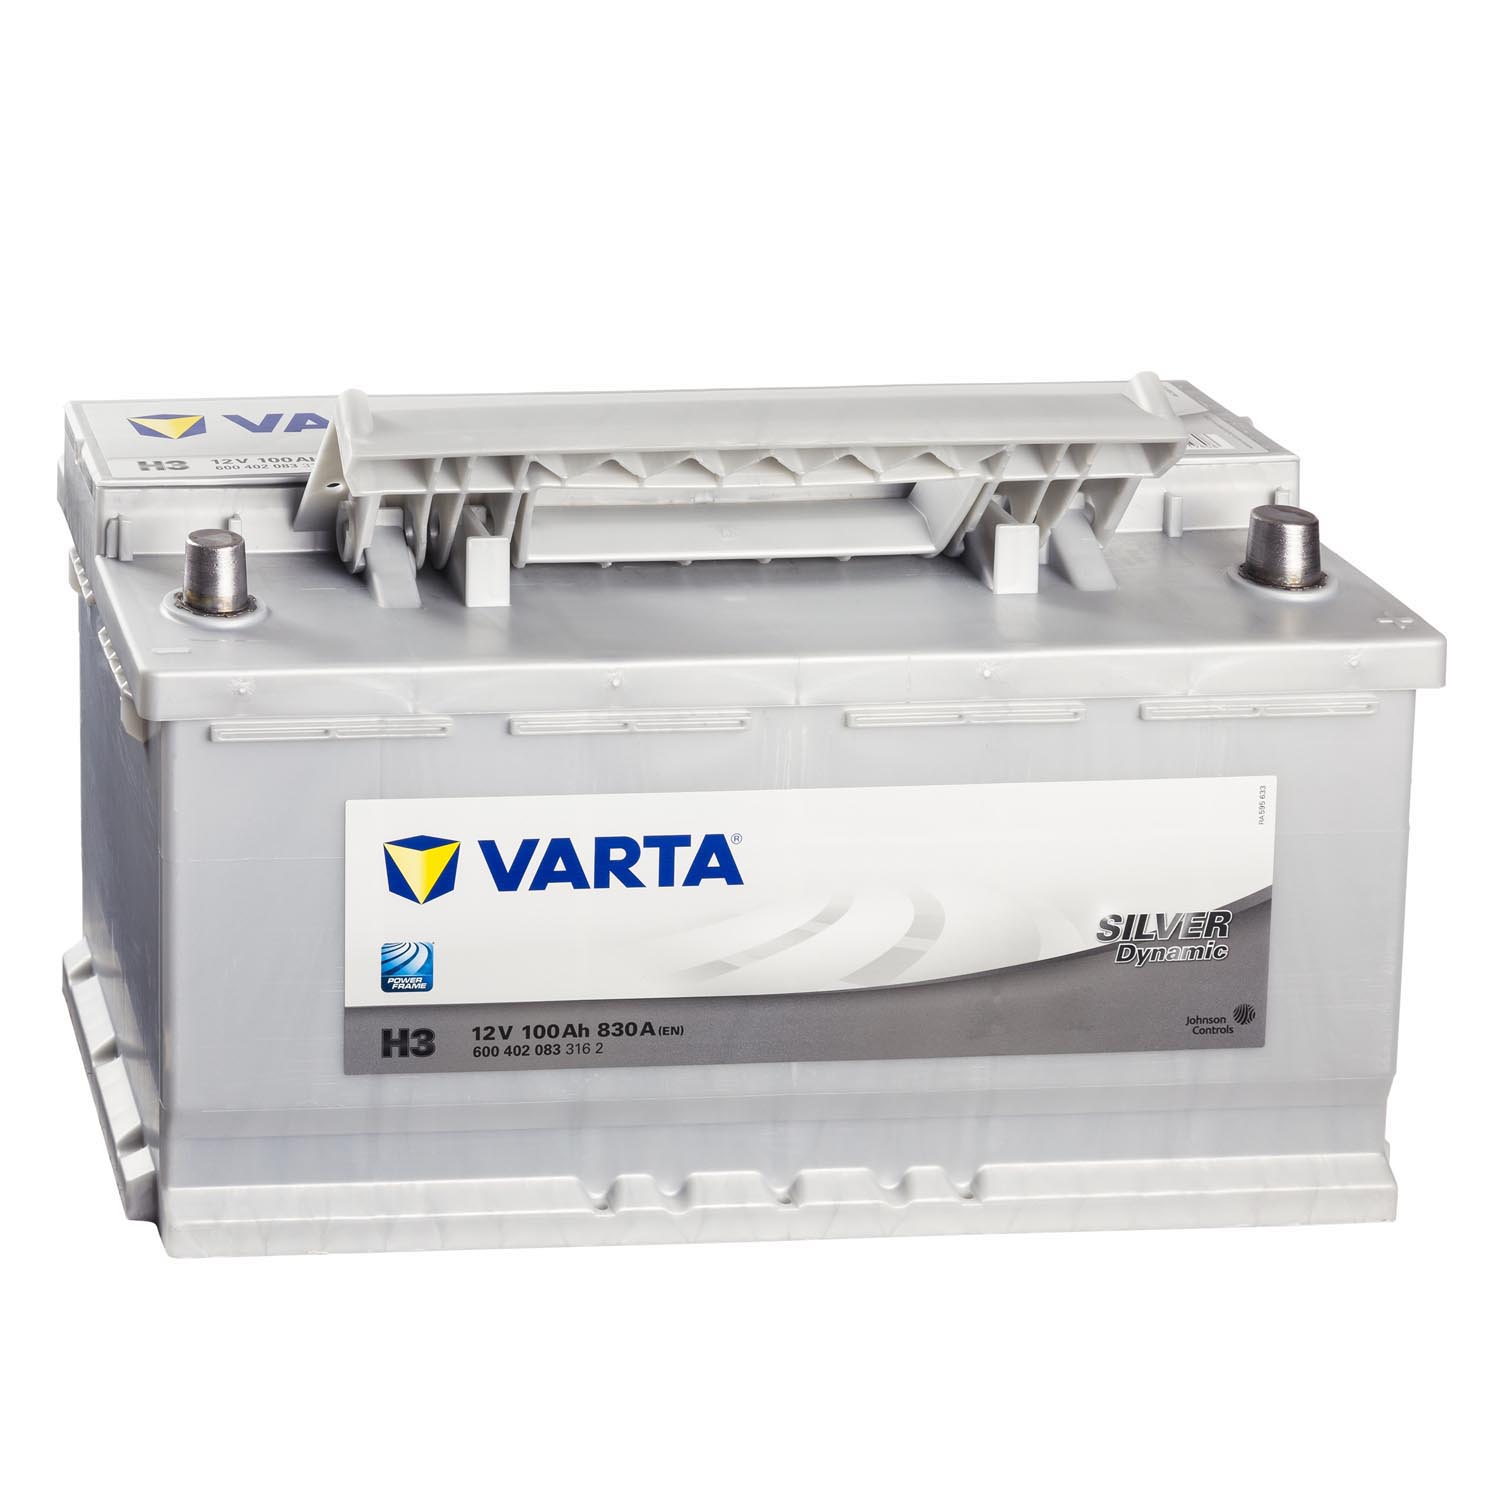 Varta Silver Dynamic H3 12V 100Ah 830A/EN Autobatterie -batcar.de